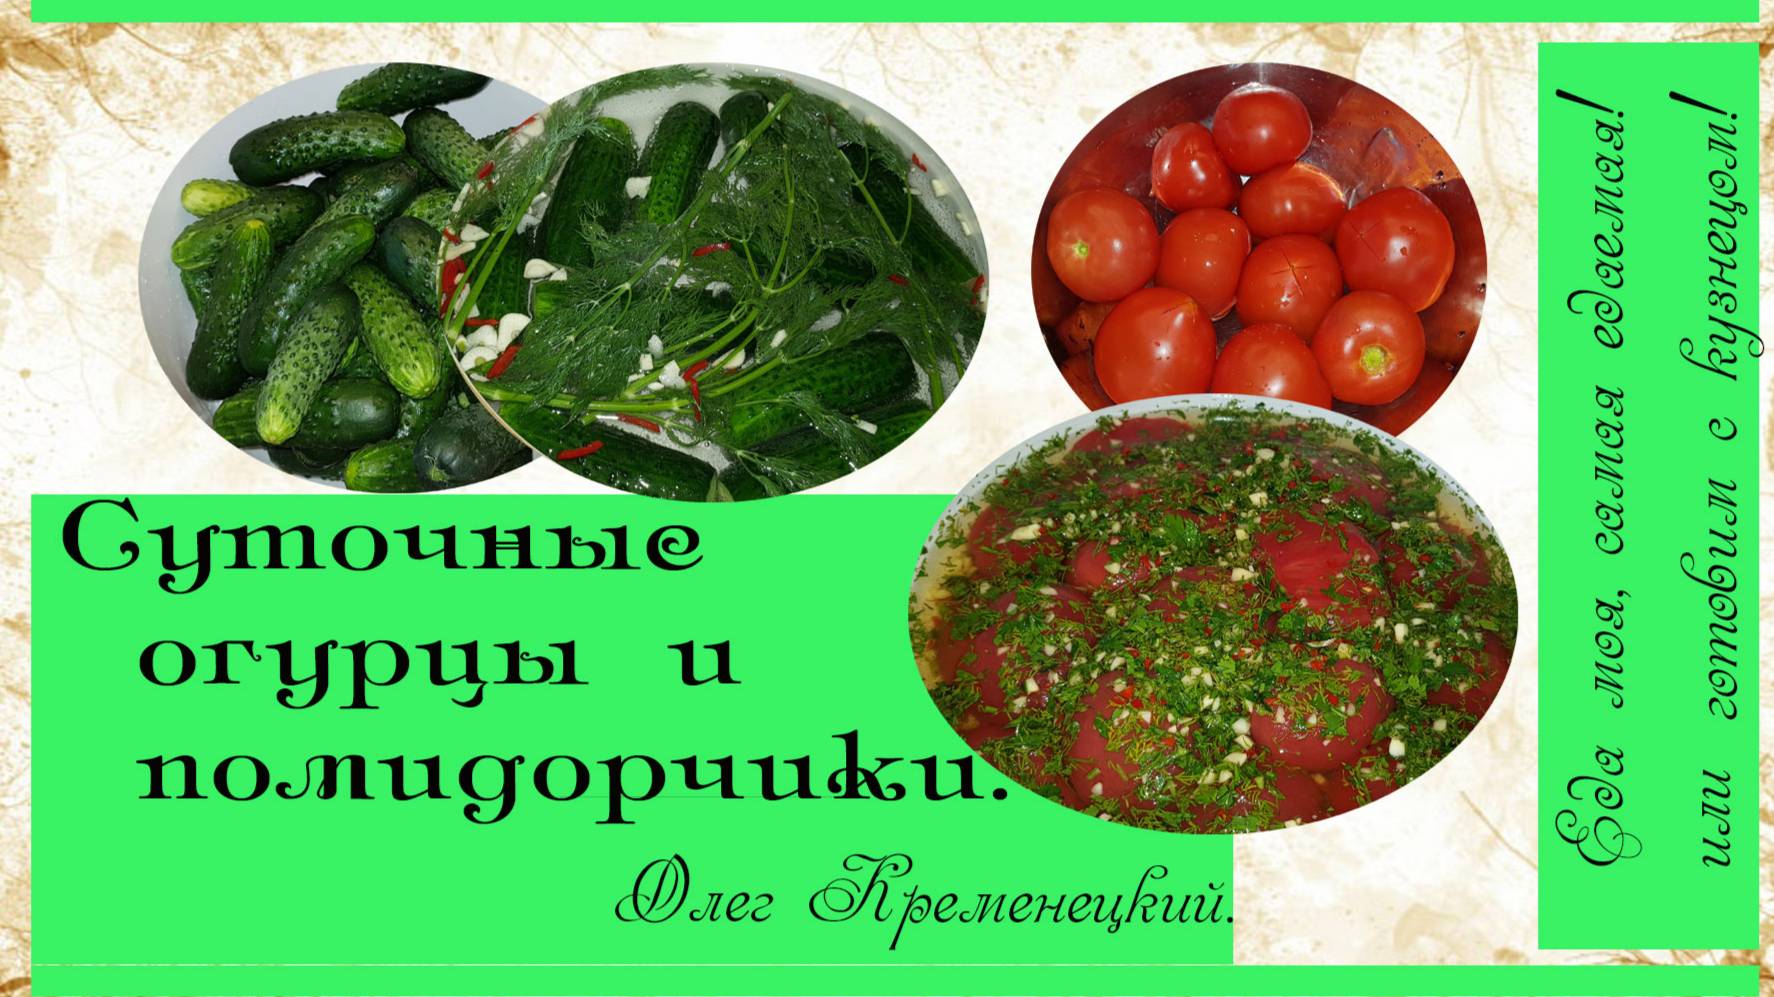 Малосолые огурчики и помидорчики от повара-кузнеца Сергеича с Касимова